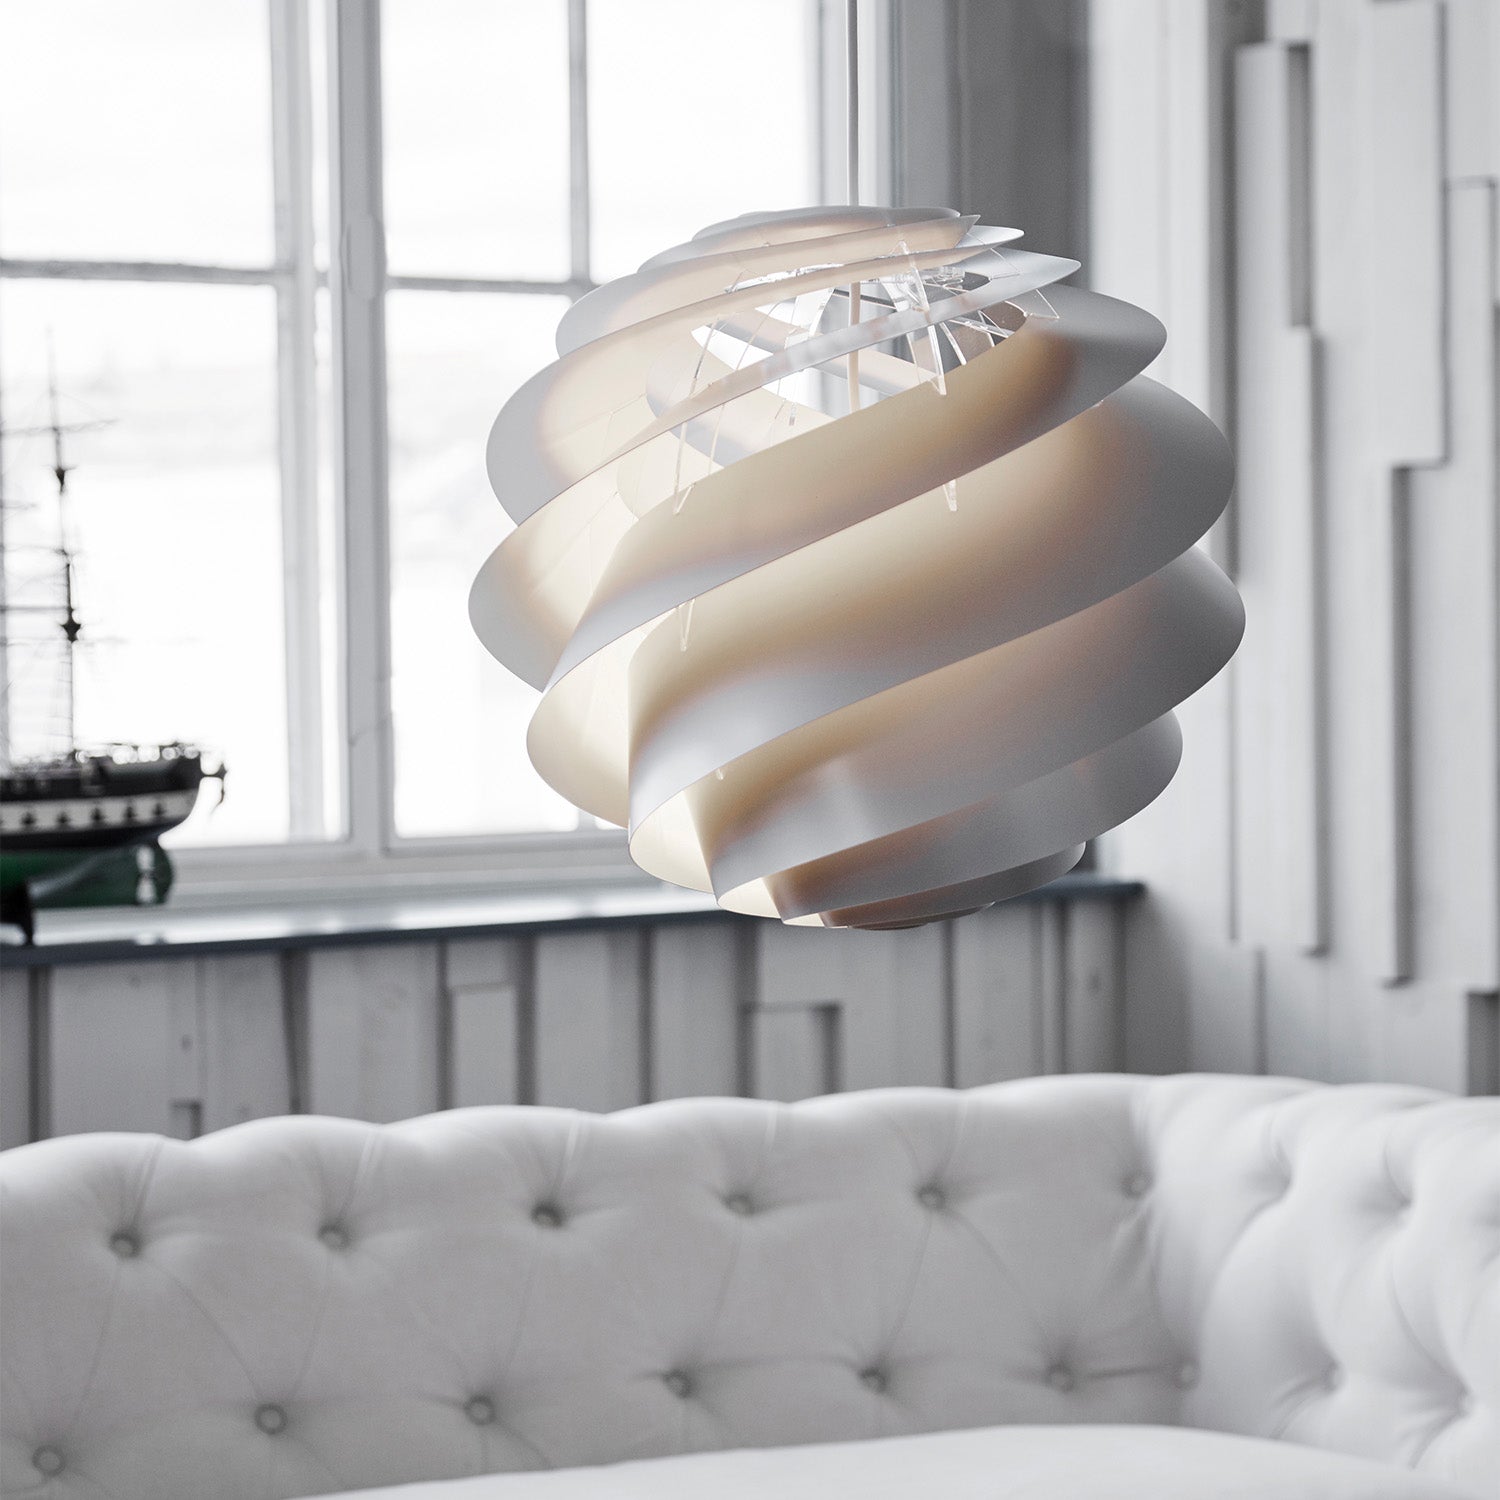 SWIRL 3 - Suspension spirale blanc ou cuivre, création designer